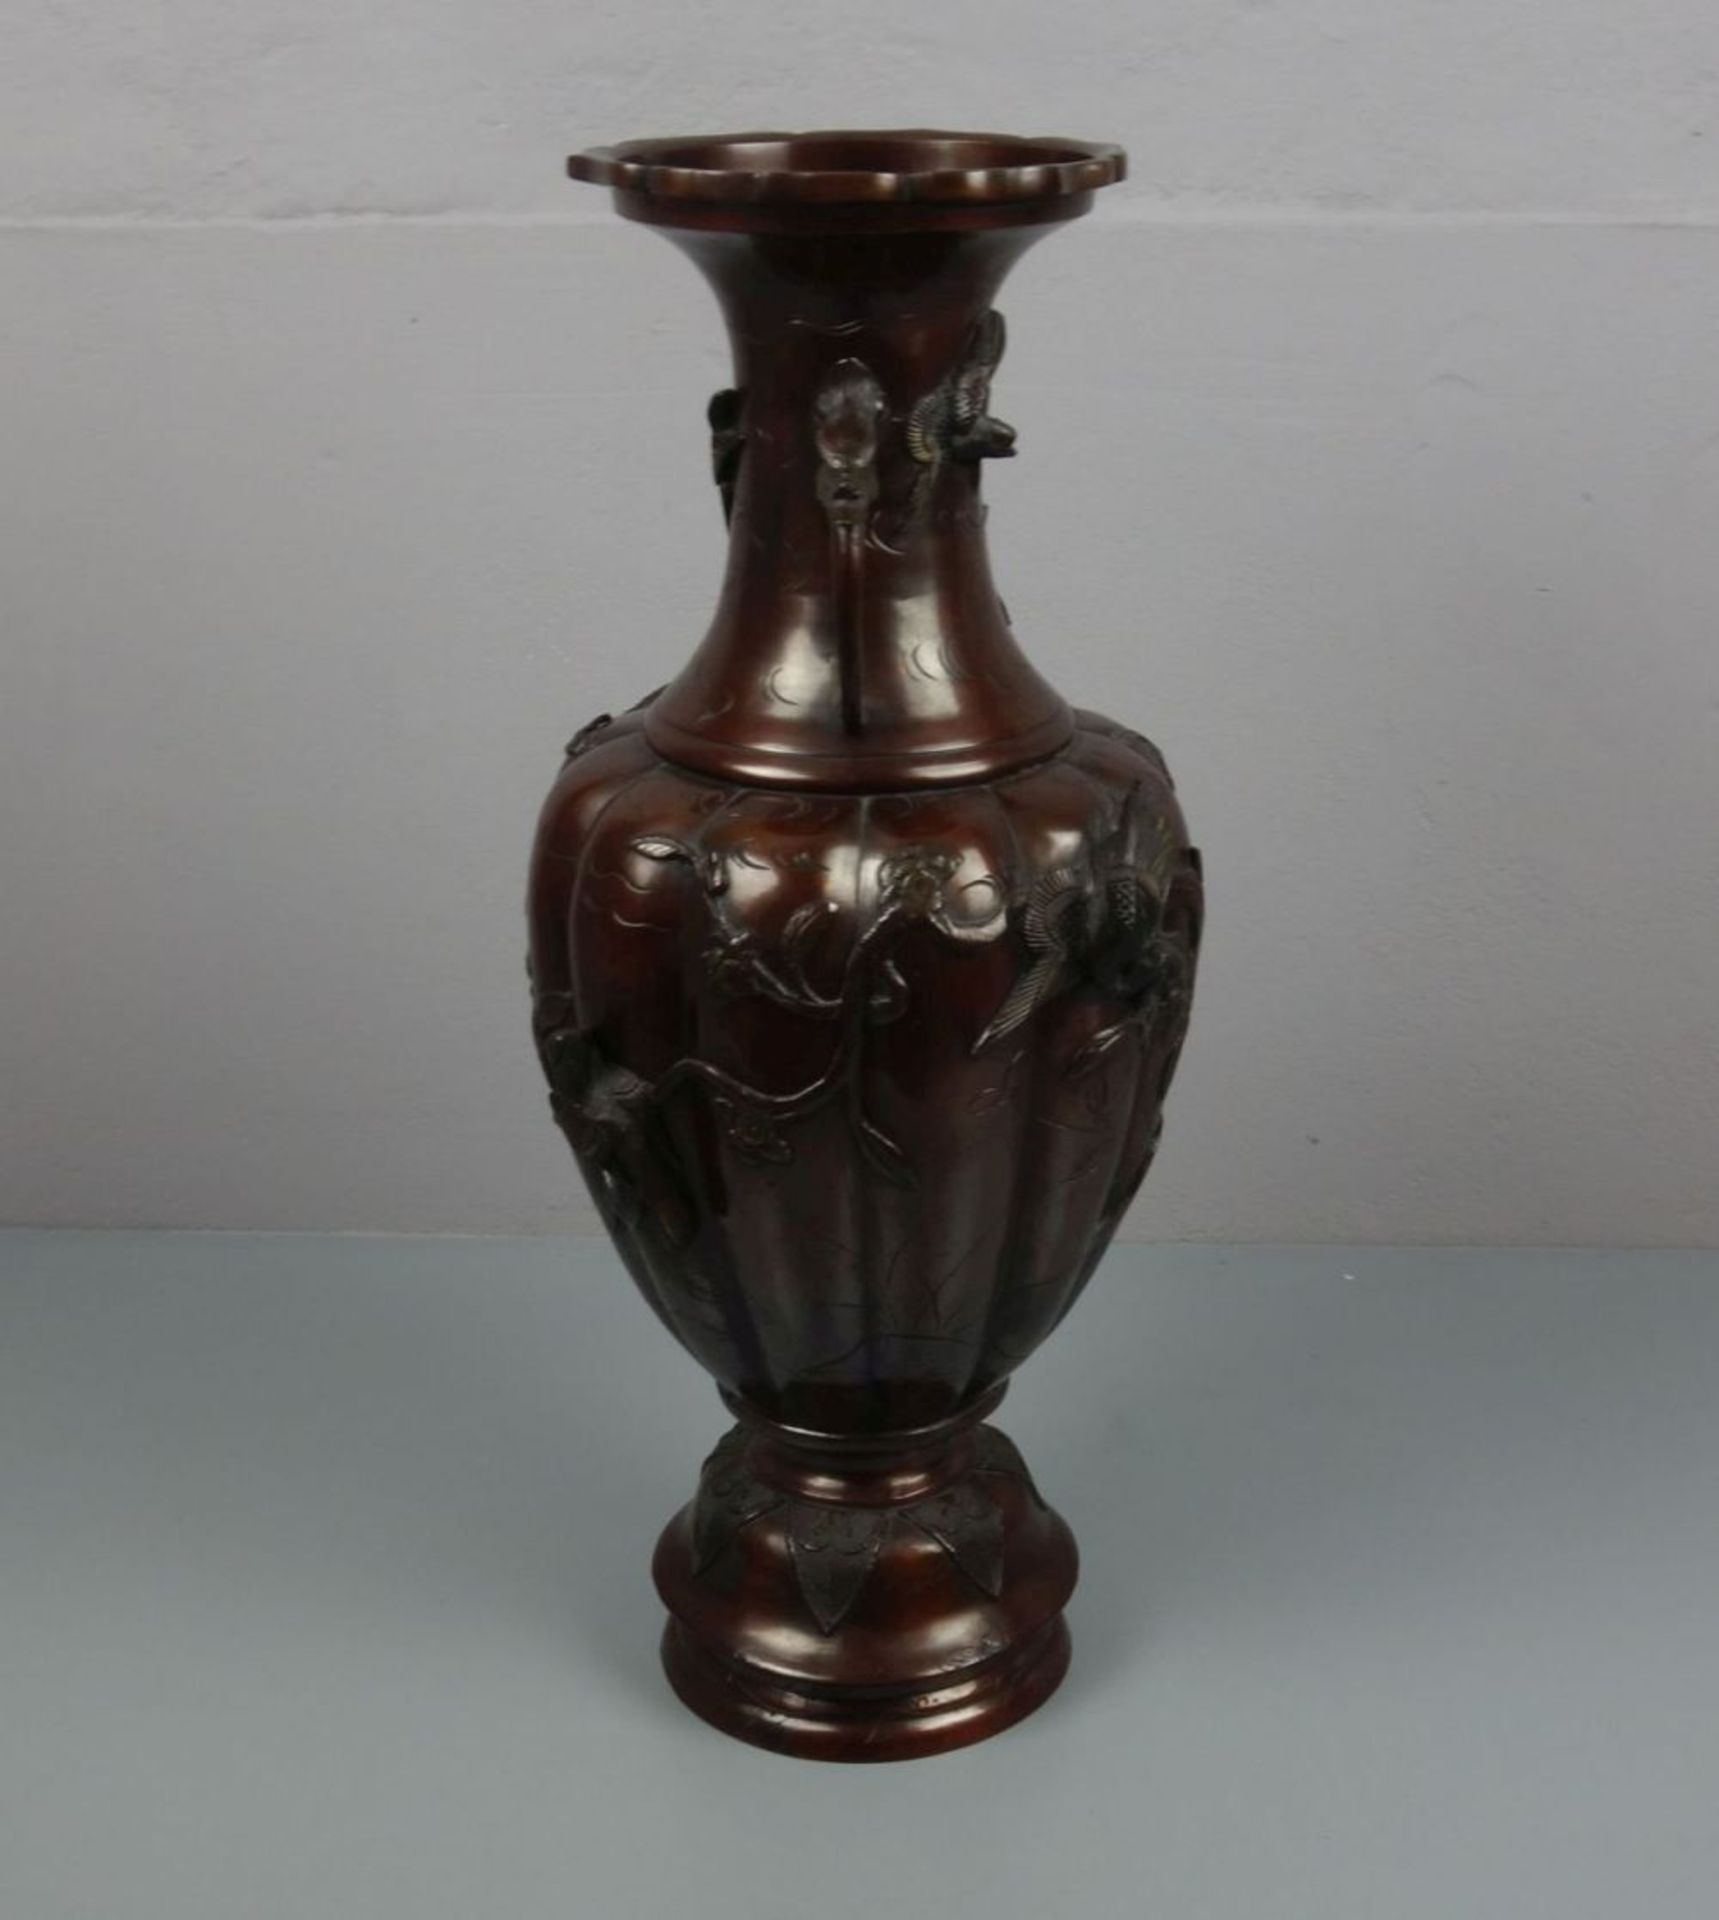 BODENVASE AUS METALL / chinese metal vase, China, 20. Jh., brüniertes Metall, unter dem Stand mit - Image 2 of 5